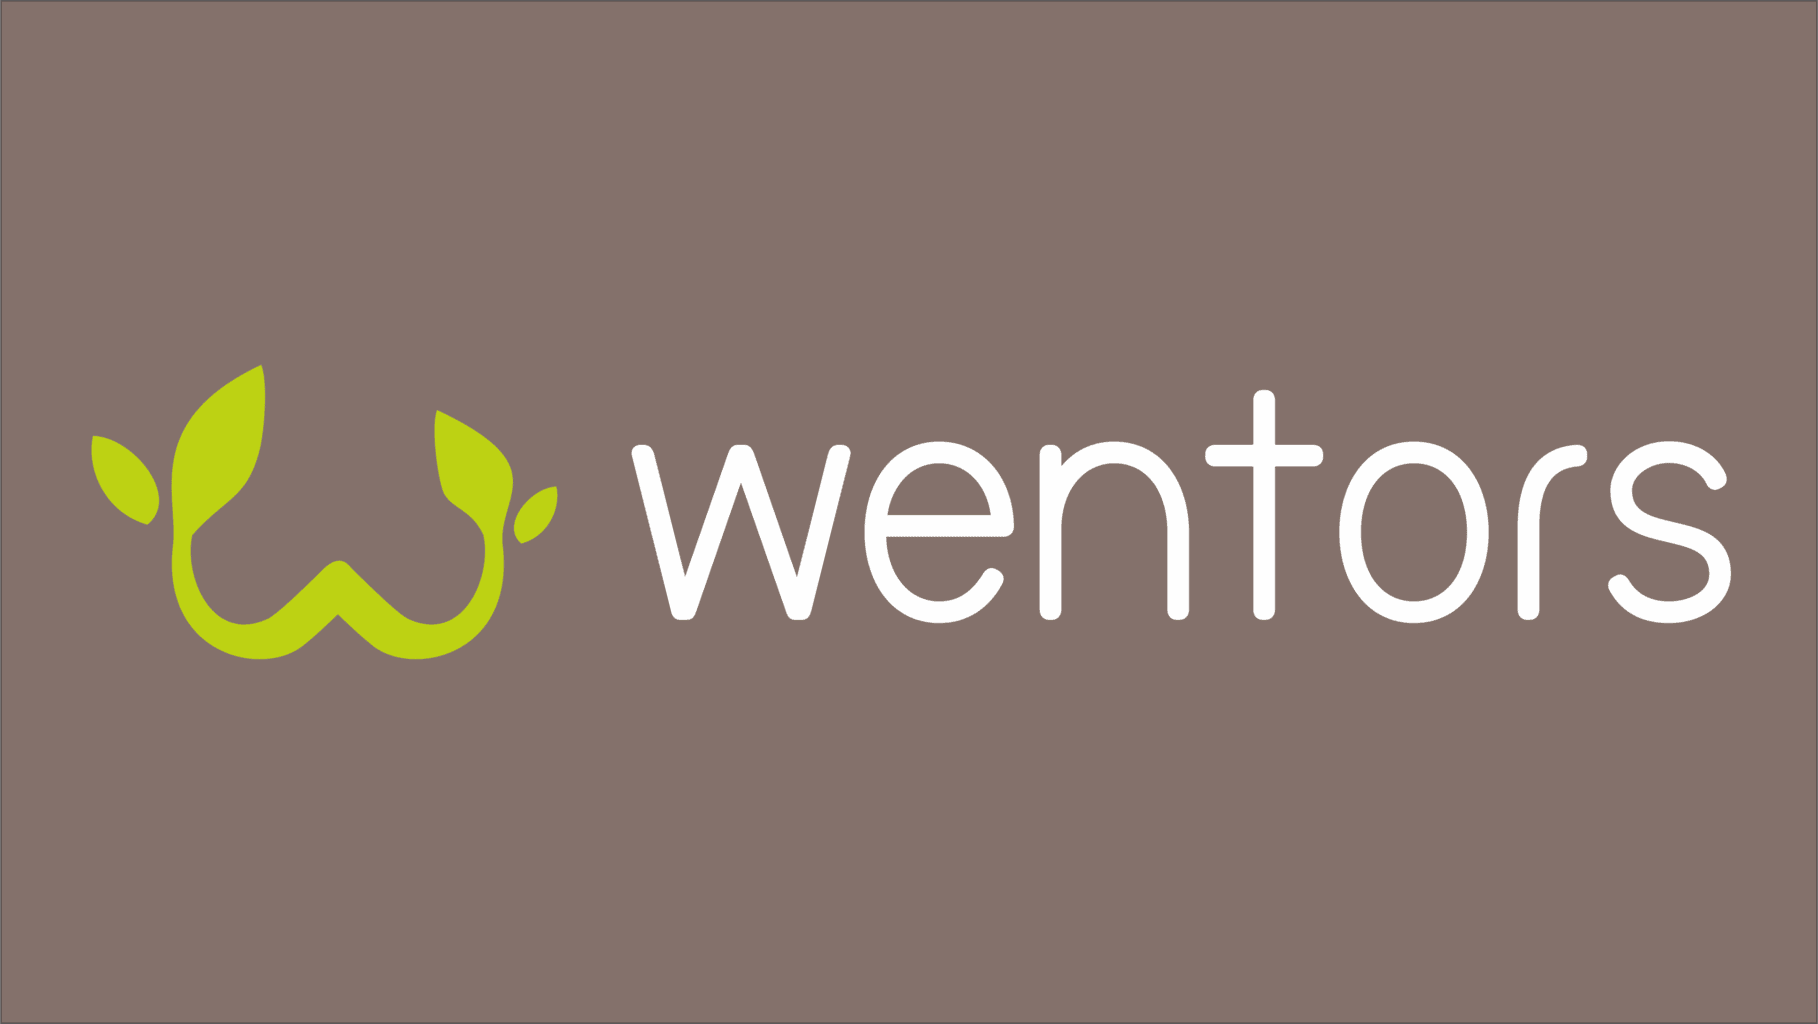 Wentors and Microsoft